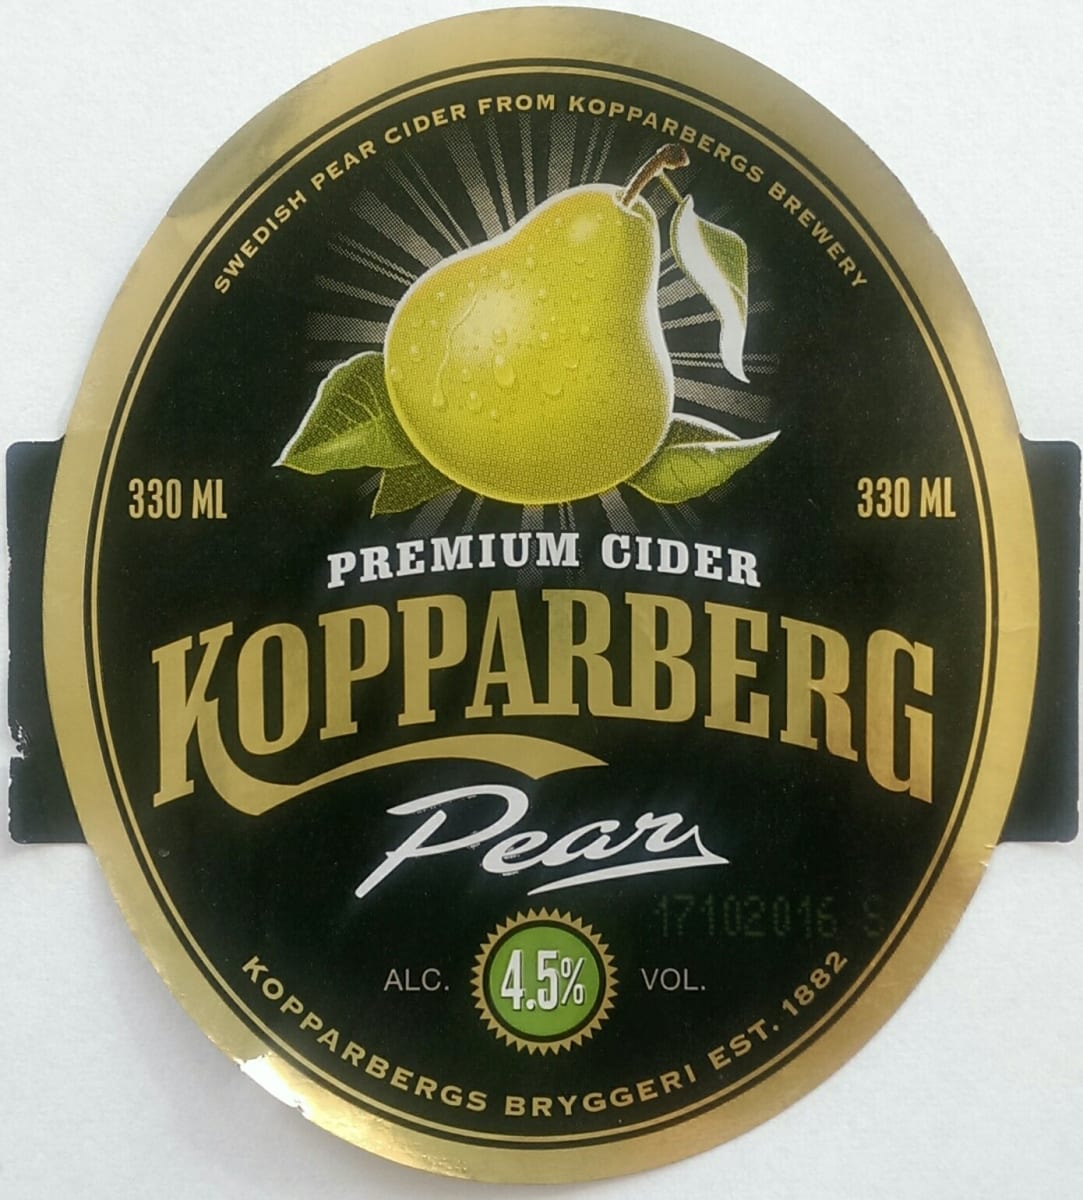 Kopparberg Pear